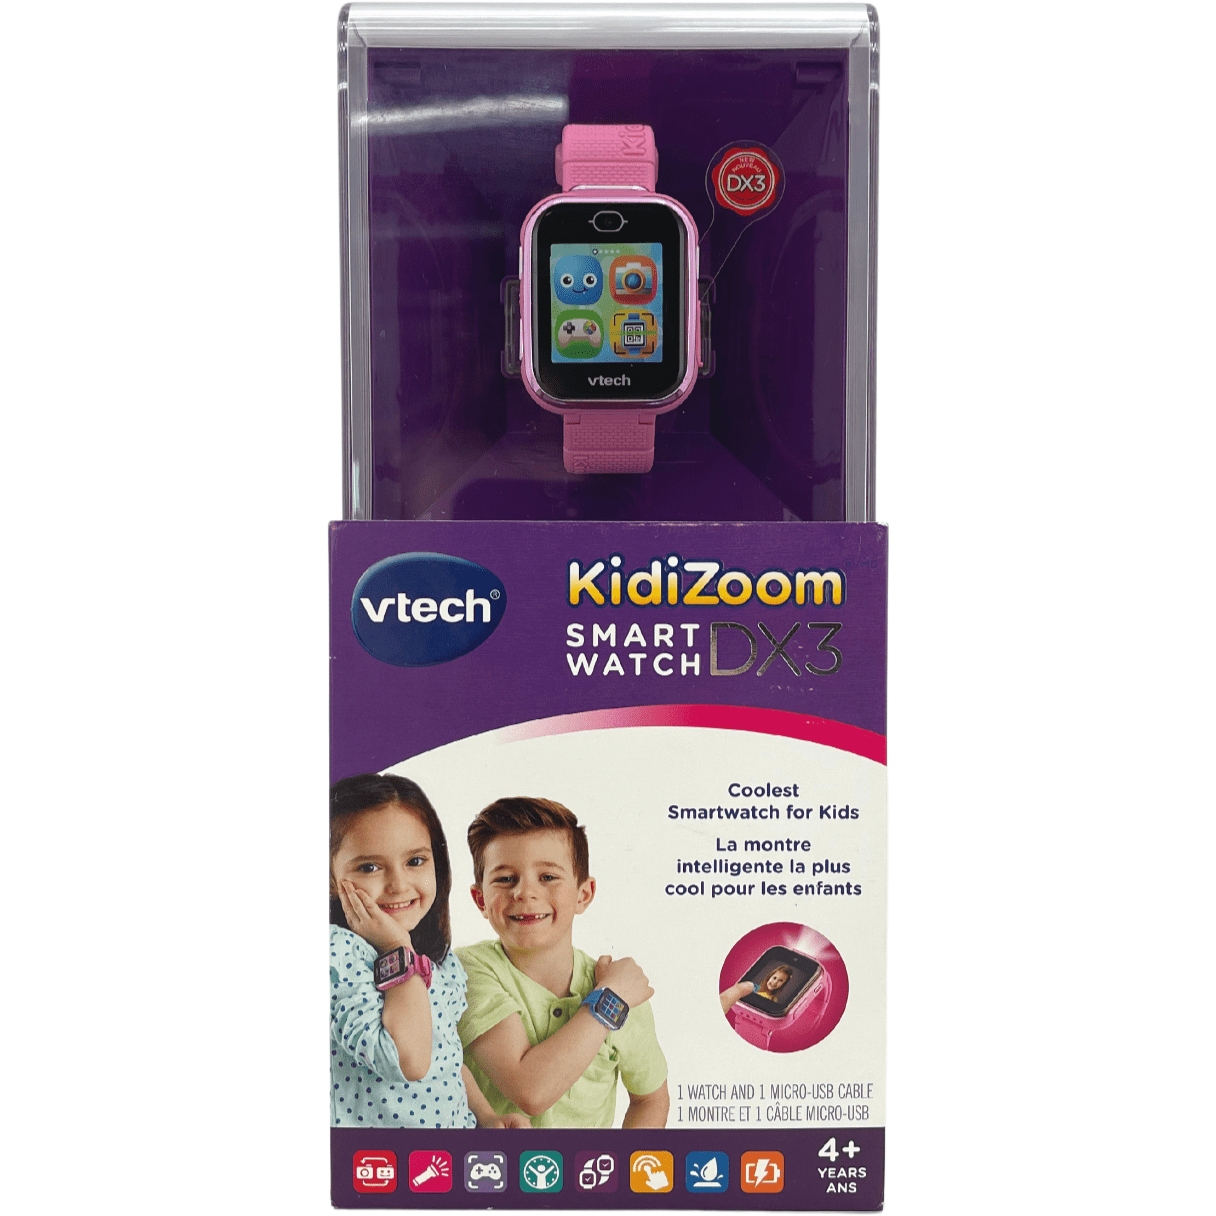 Vtech KidiZoom Smart Watch / DX3 / Dual Cameras / Pink